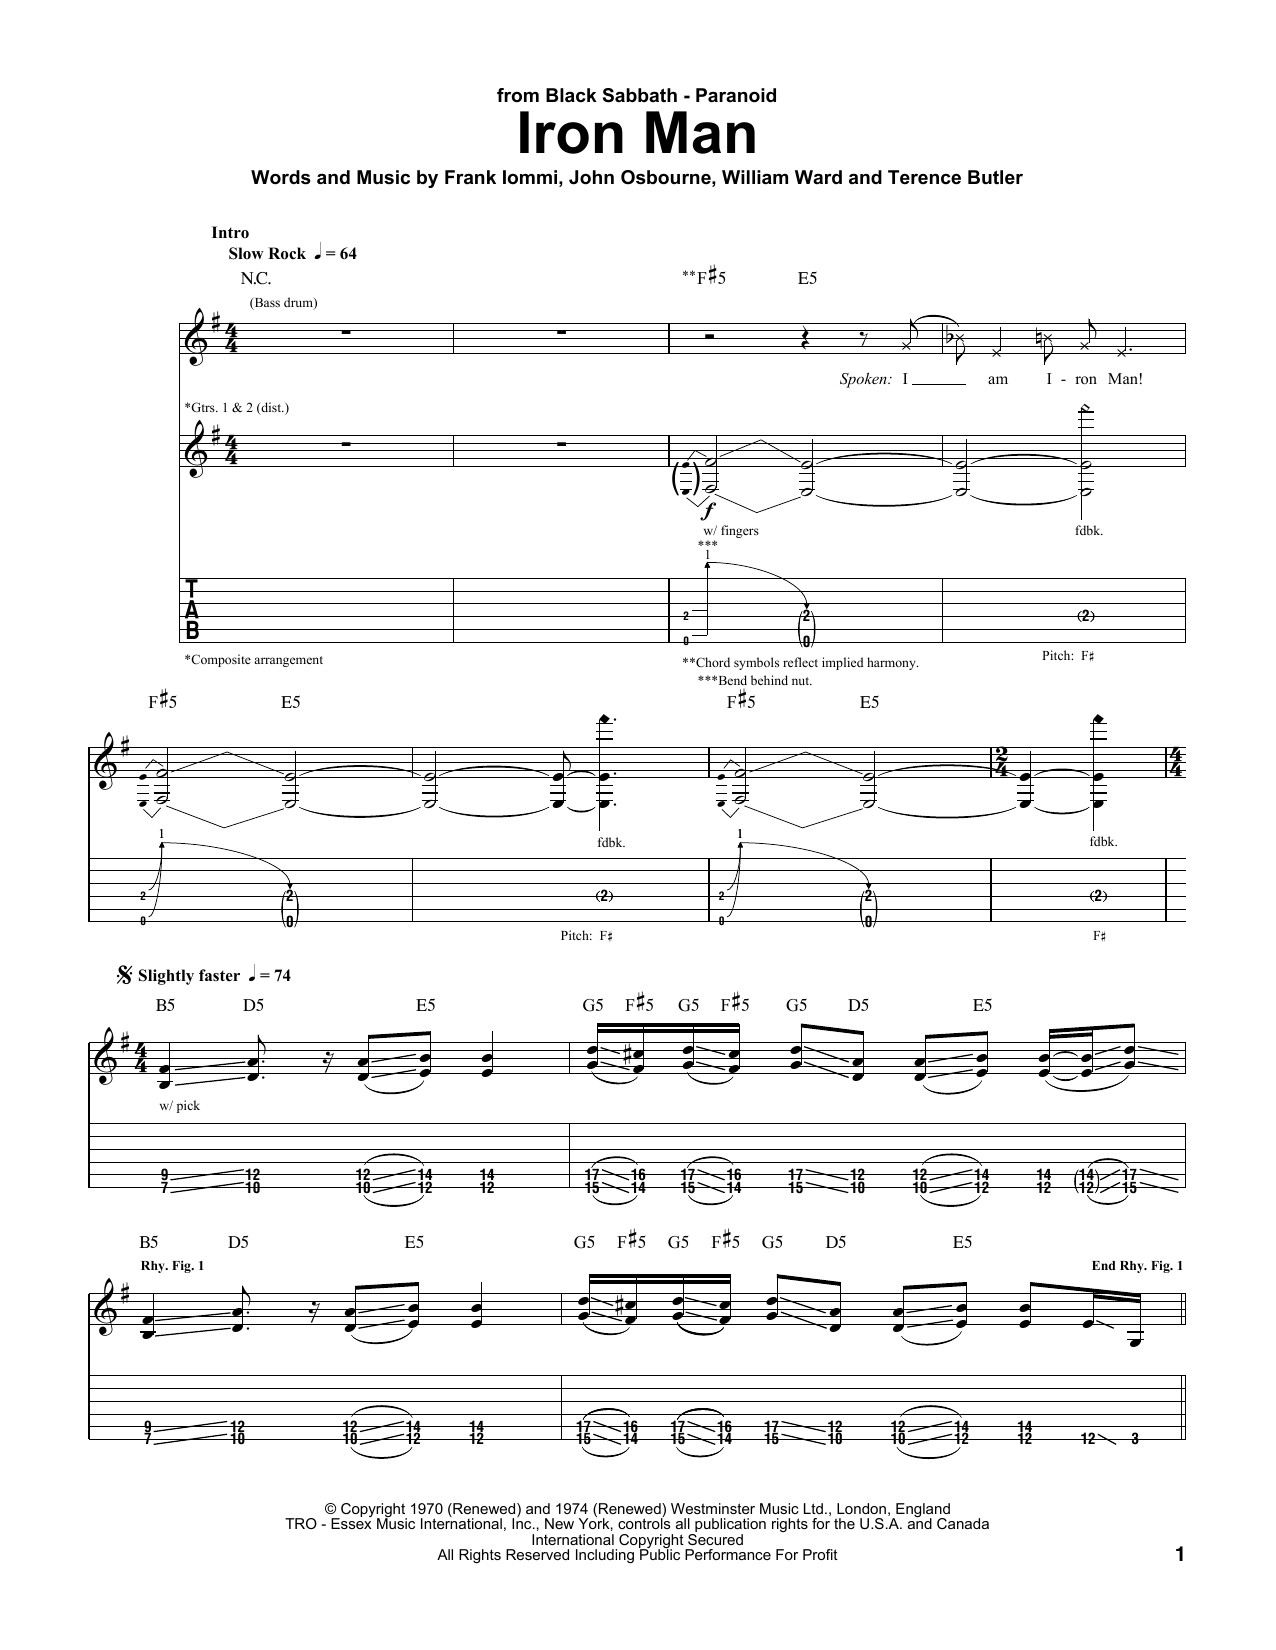 Black Sabbath Iron Man Sheet Music Notes & Chords for Easy Guitar Tab - Download or Print PDF